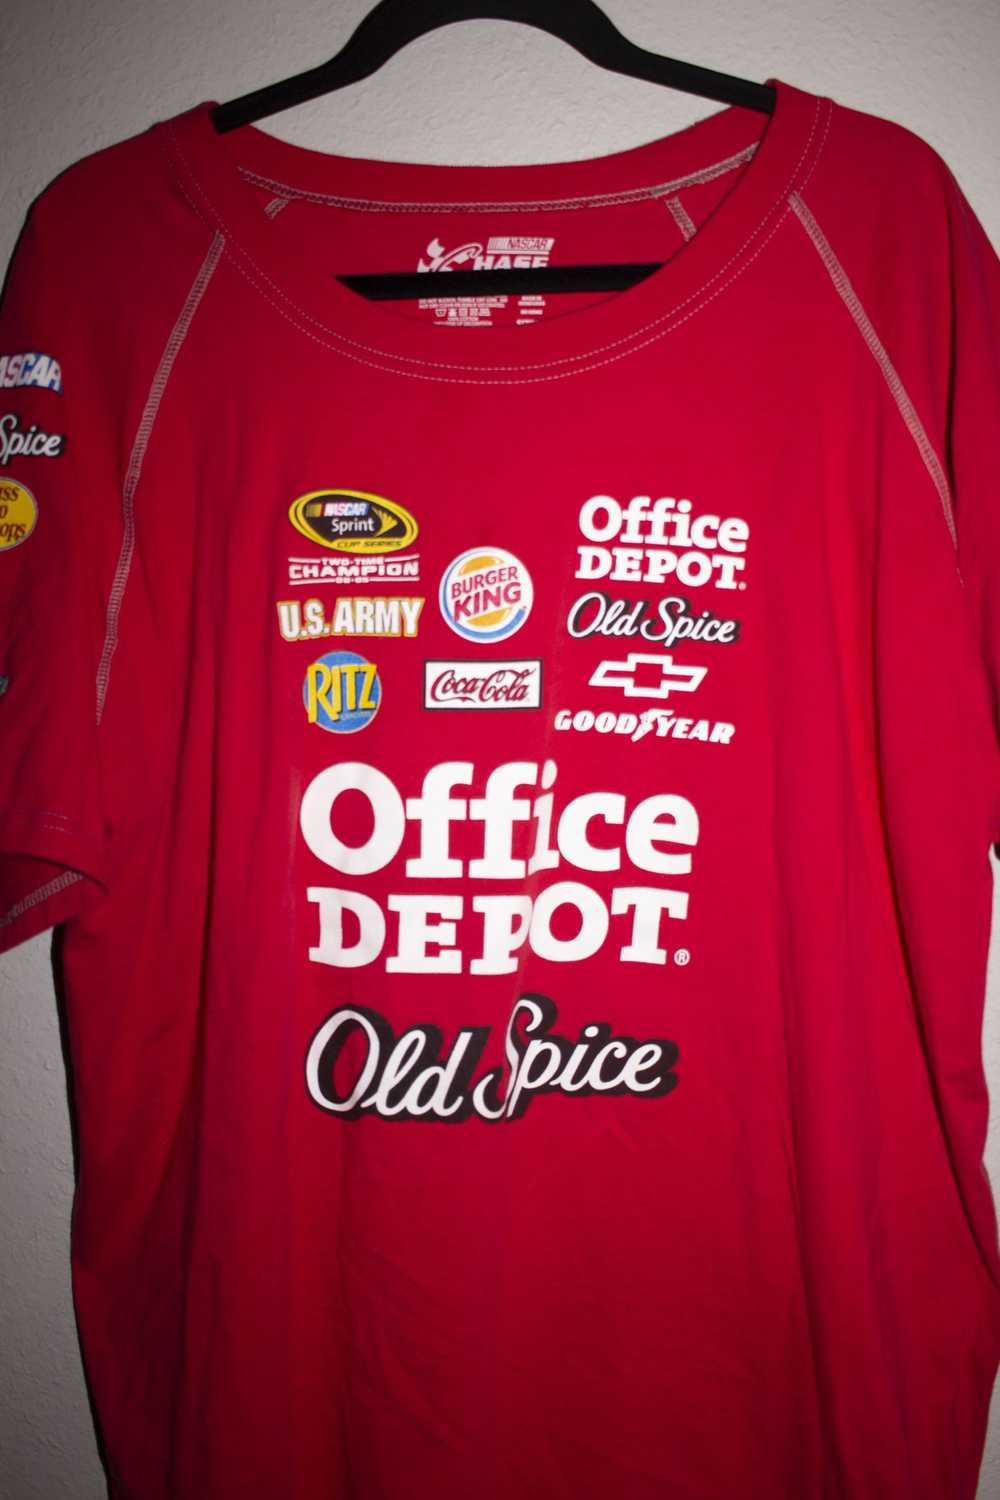 NASCAR Tony Stewart Sponsor T-Shirt - image 5